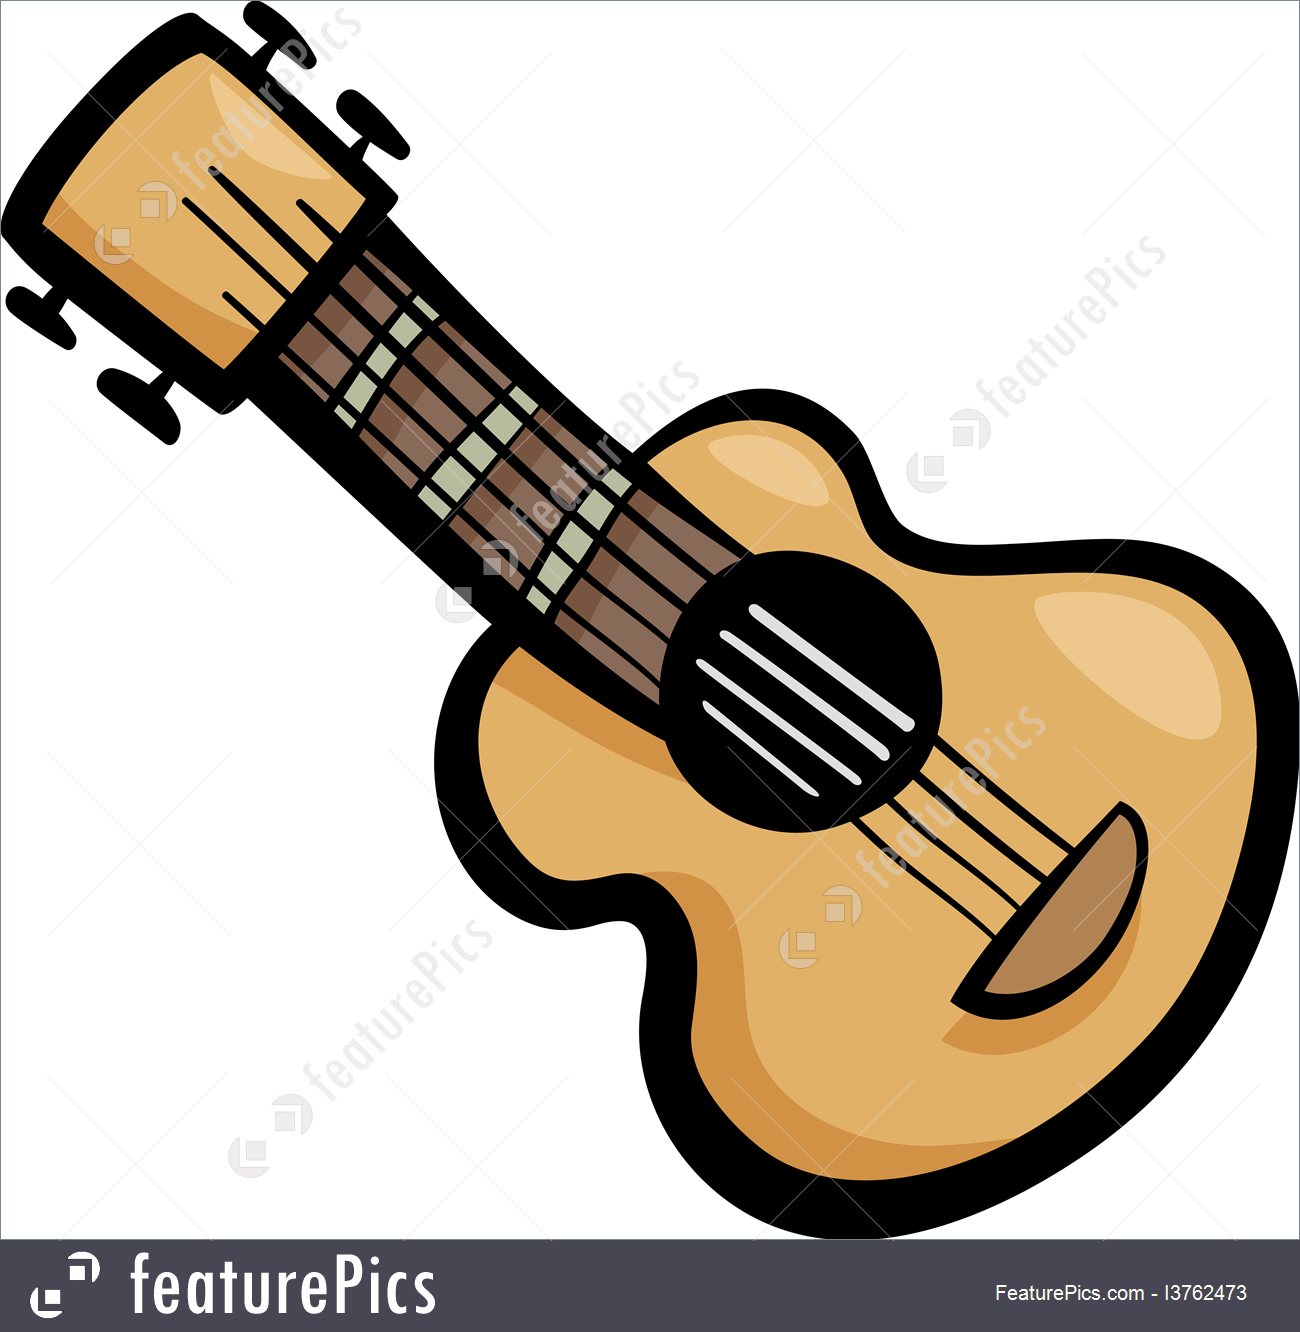  clipartlook. Clipart guitar musical instrument